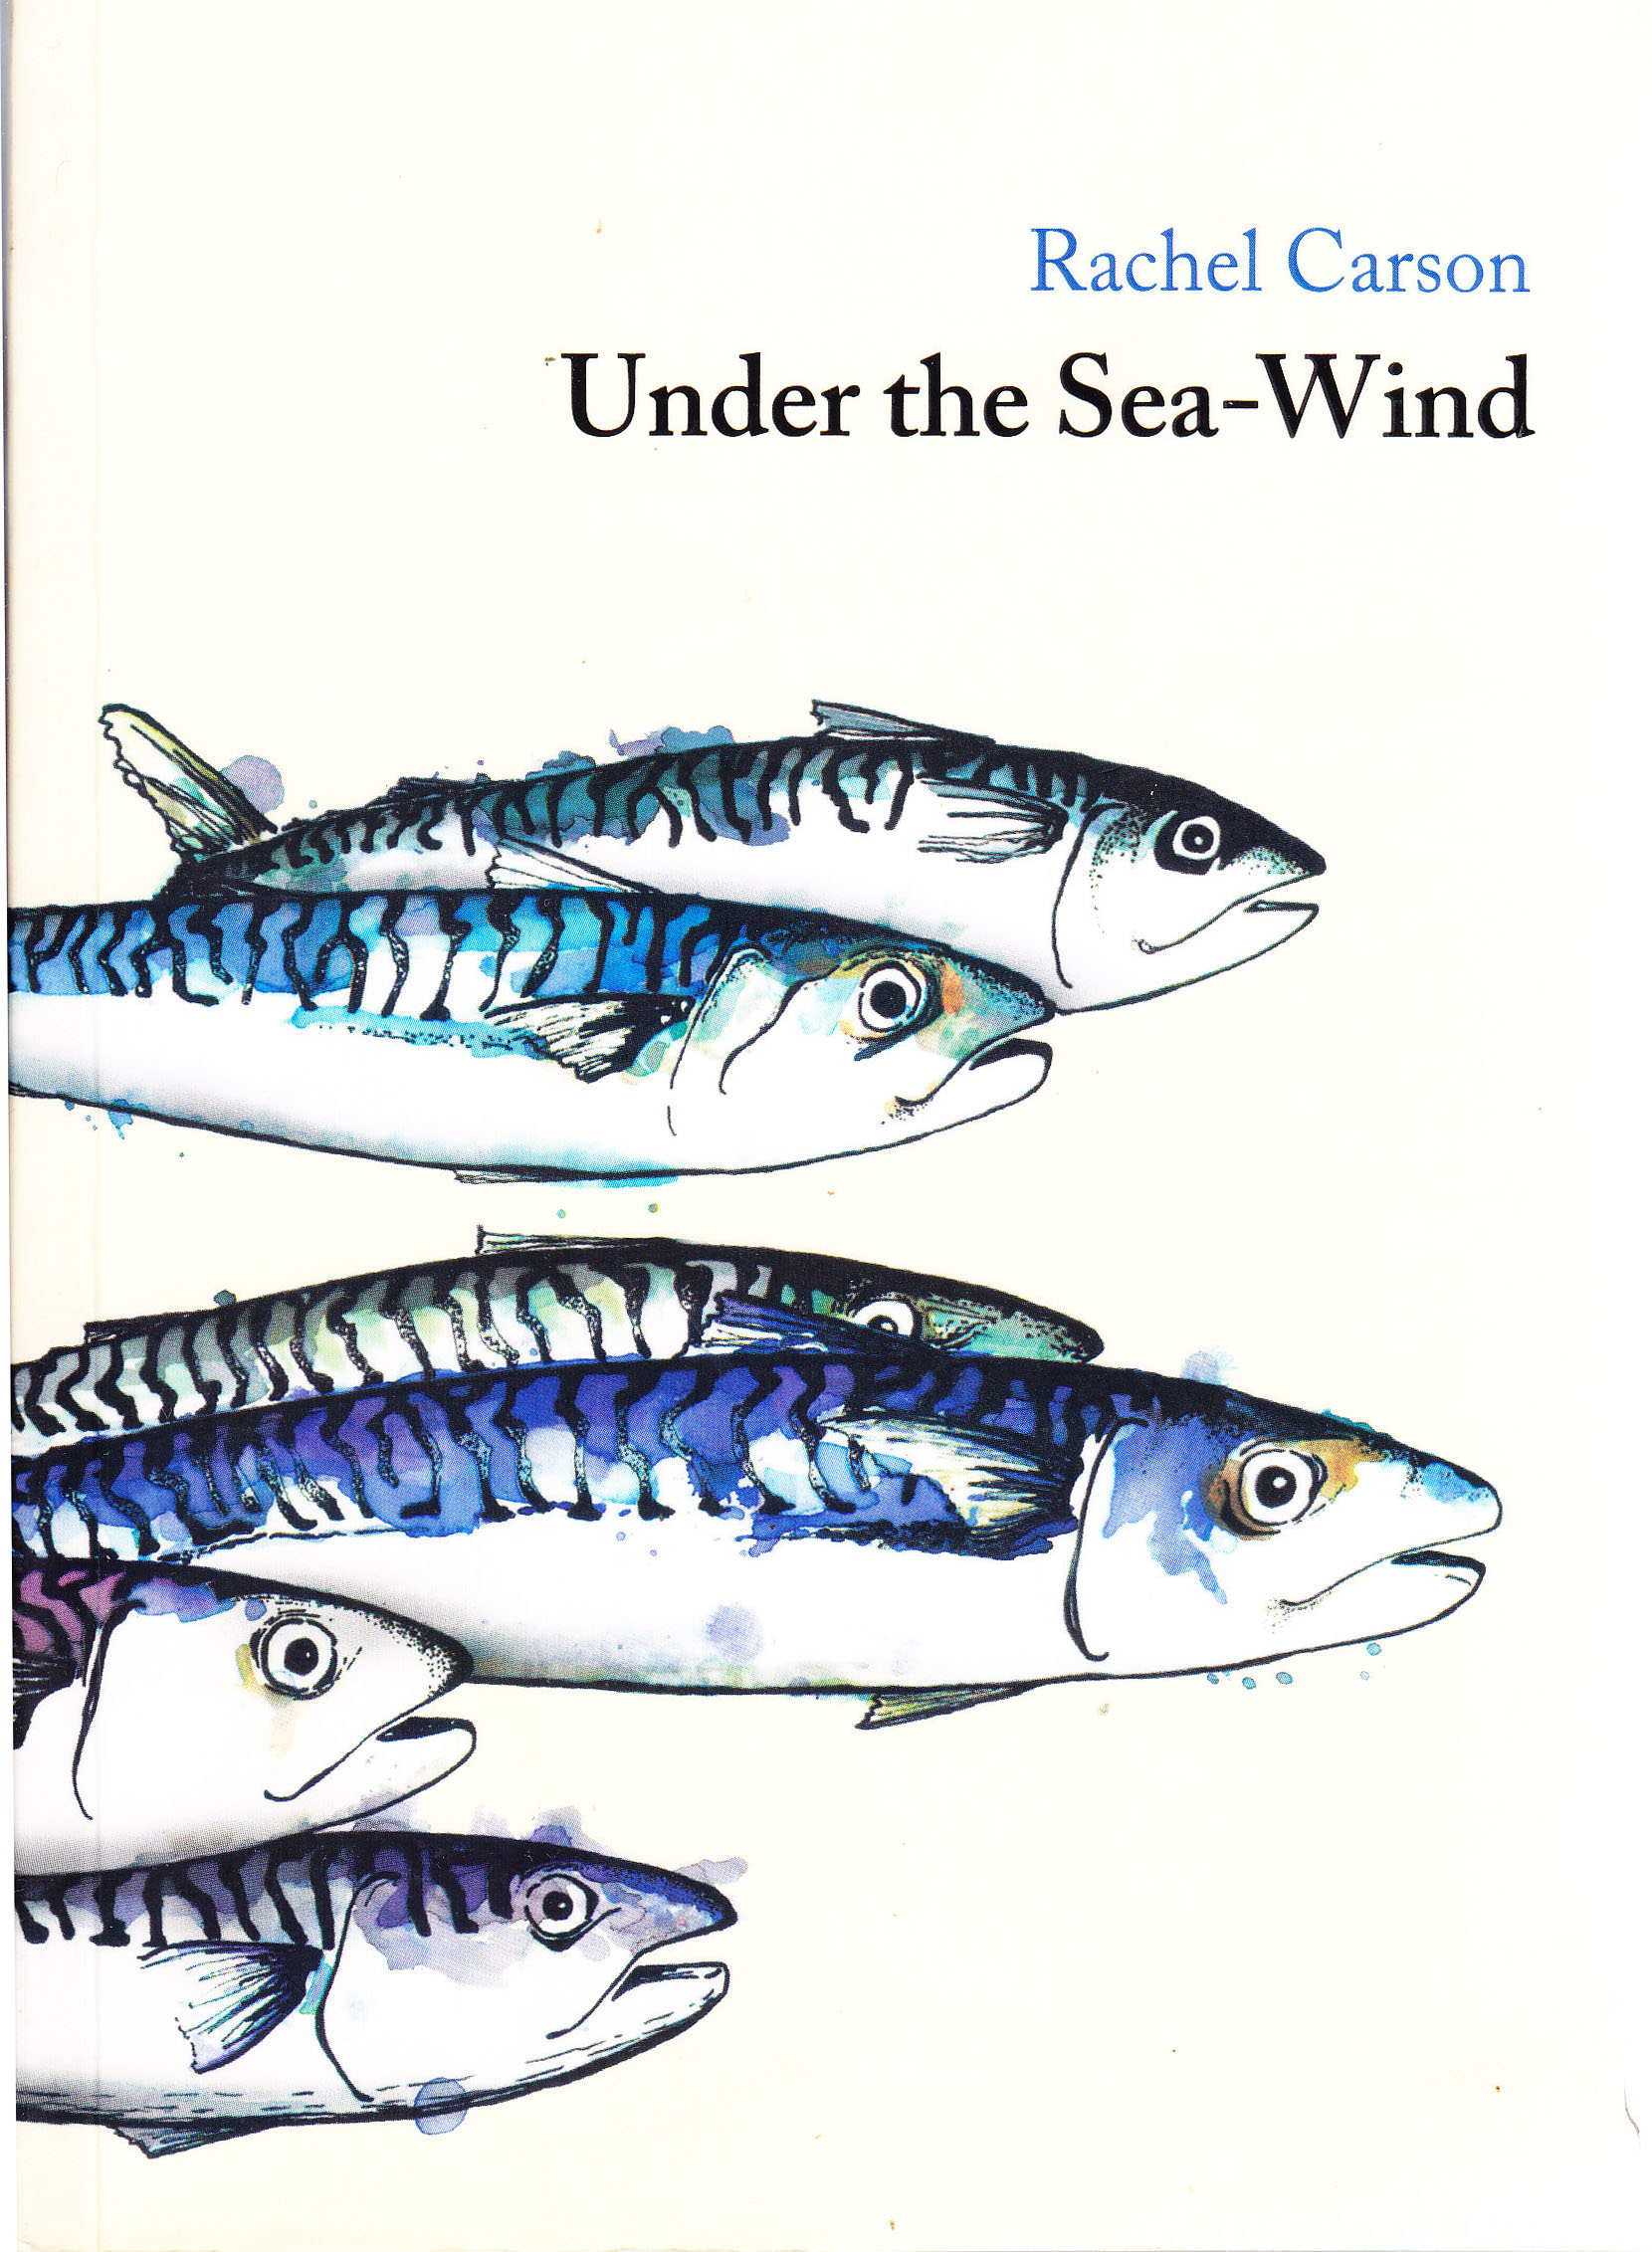  Under The Sea Wind by Rachel Carson.